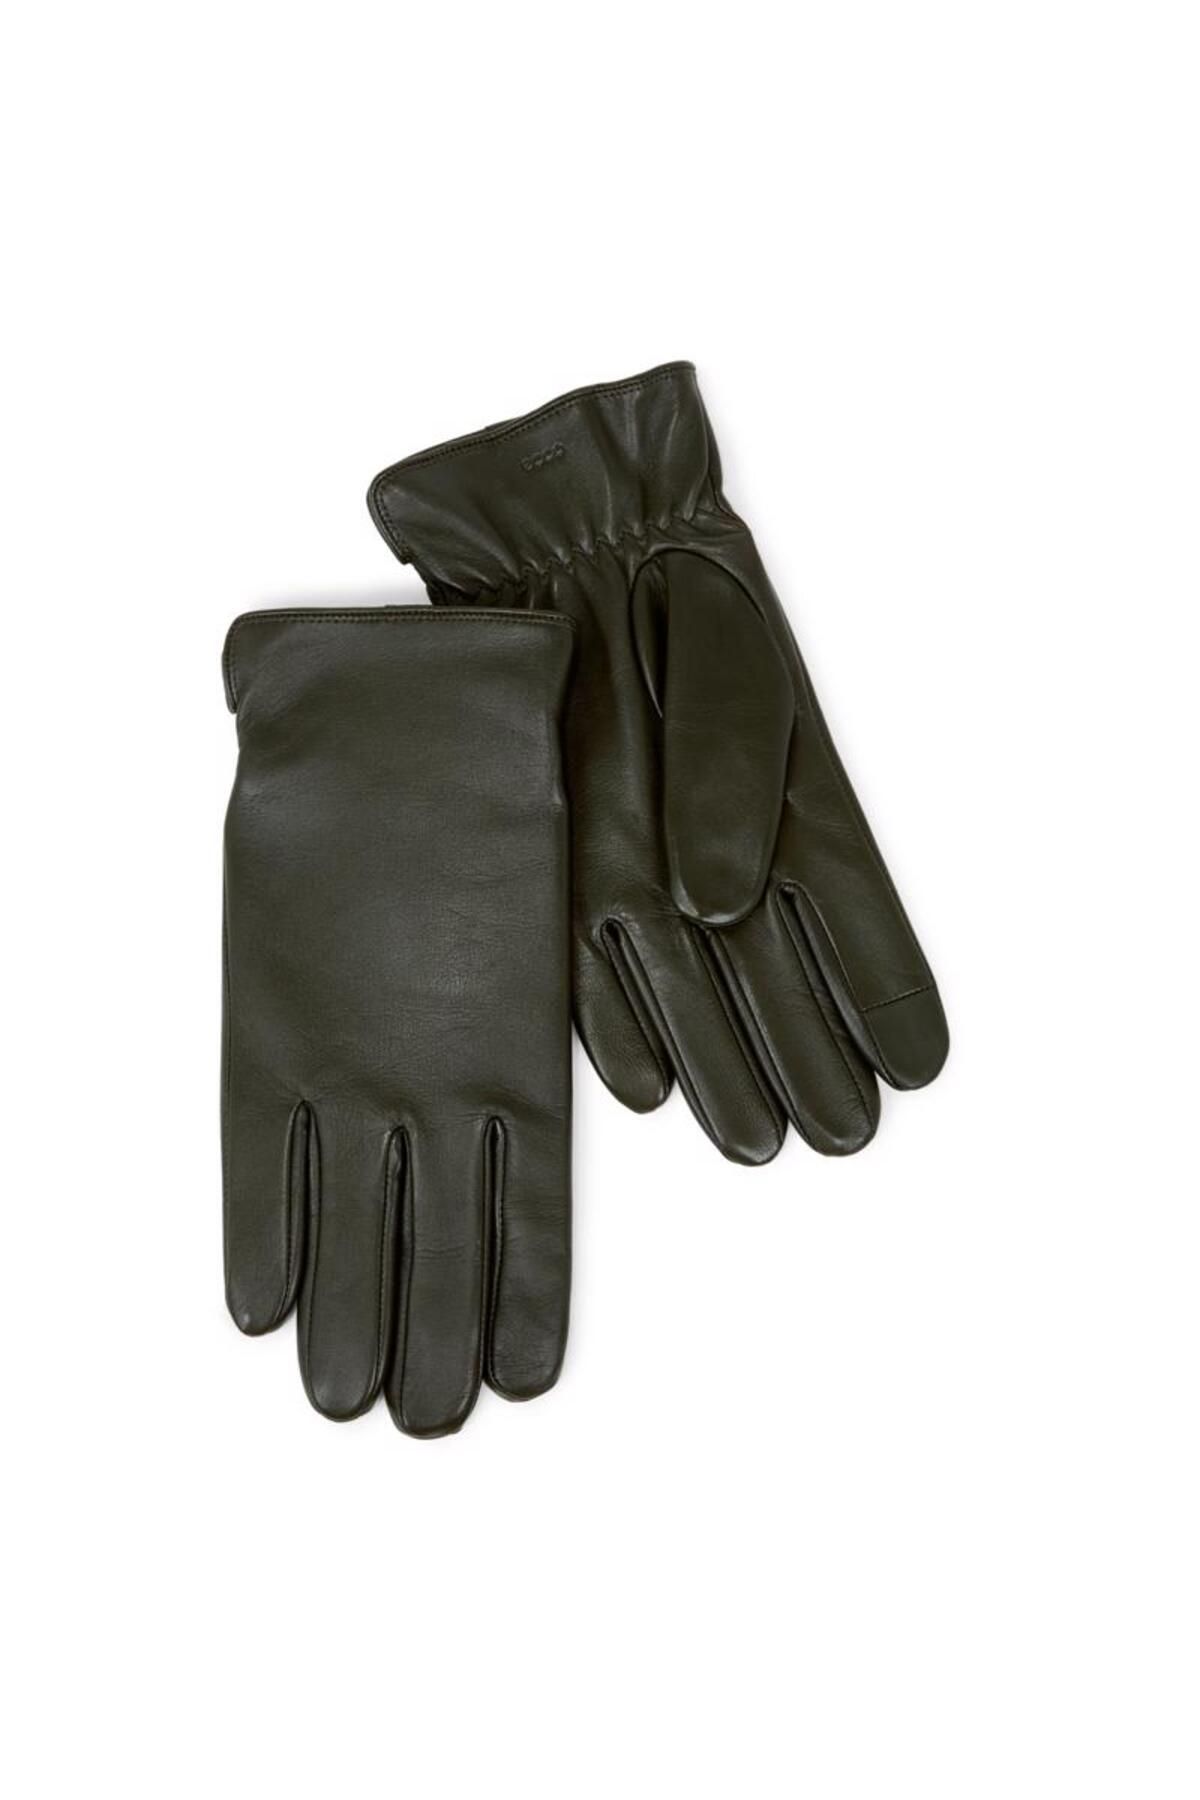 Ecco Mens Minimal Gloves